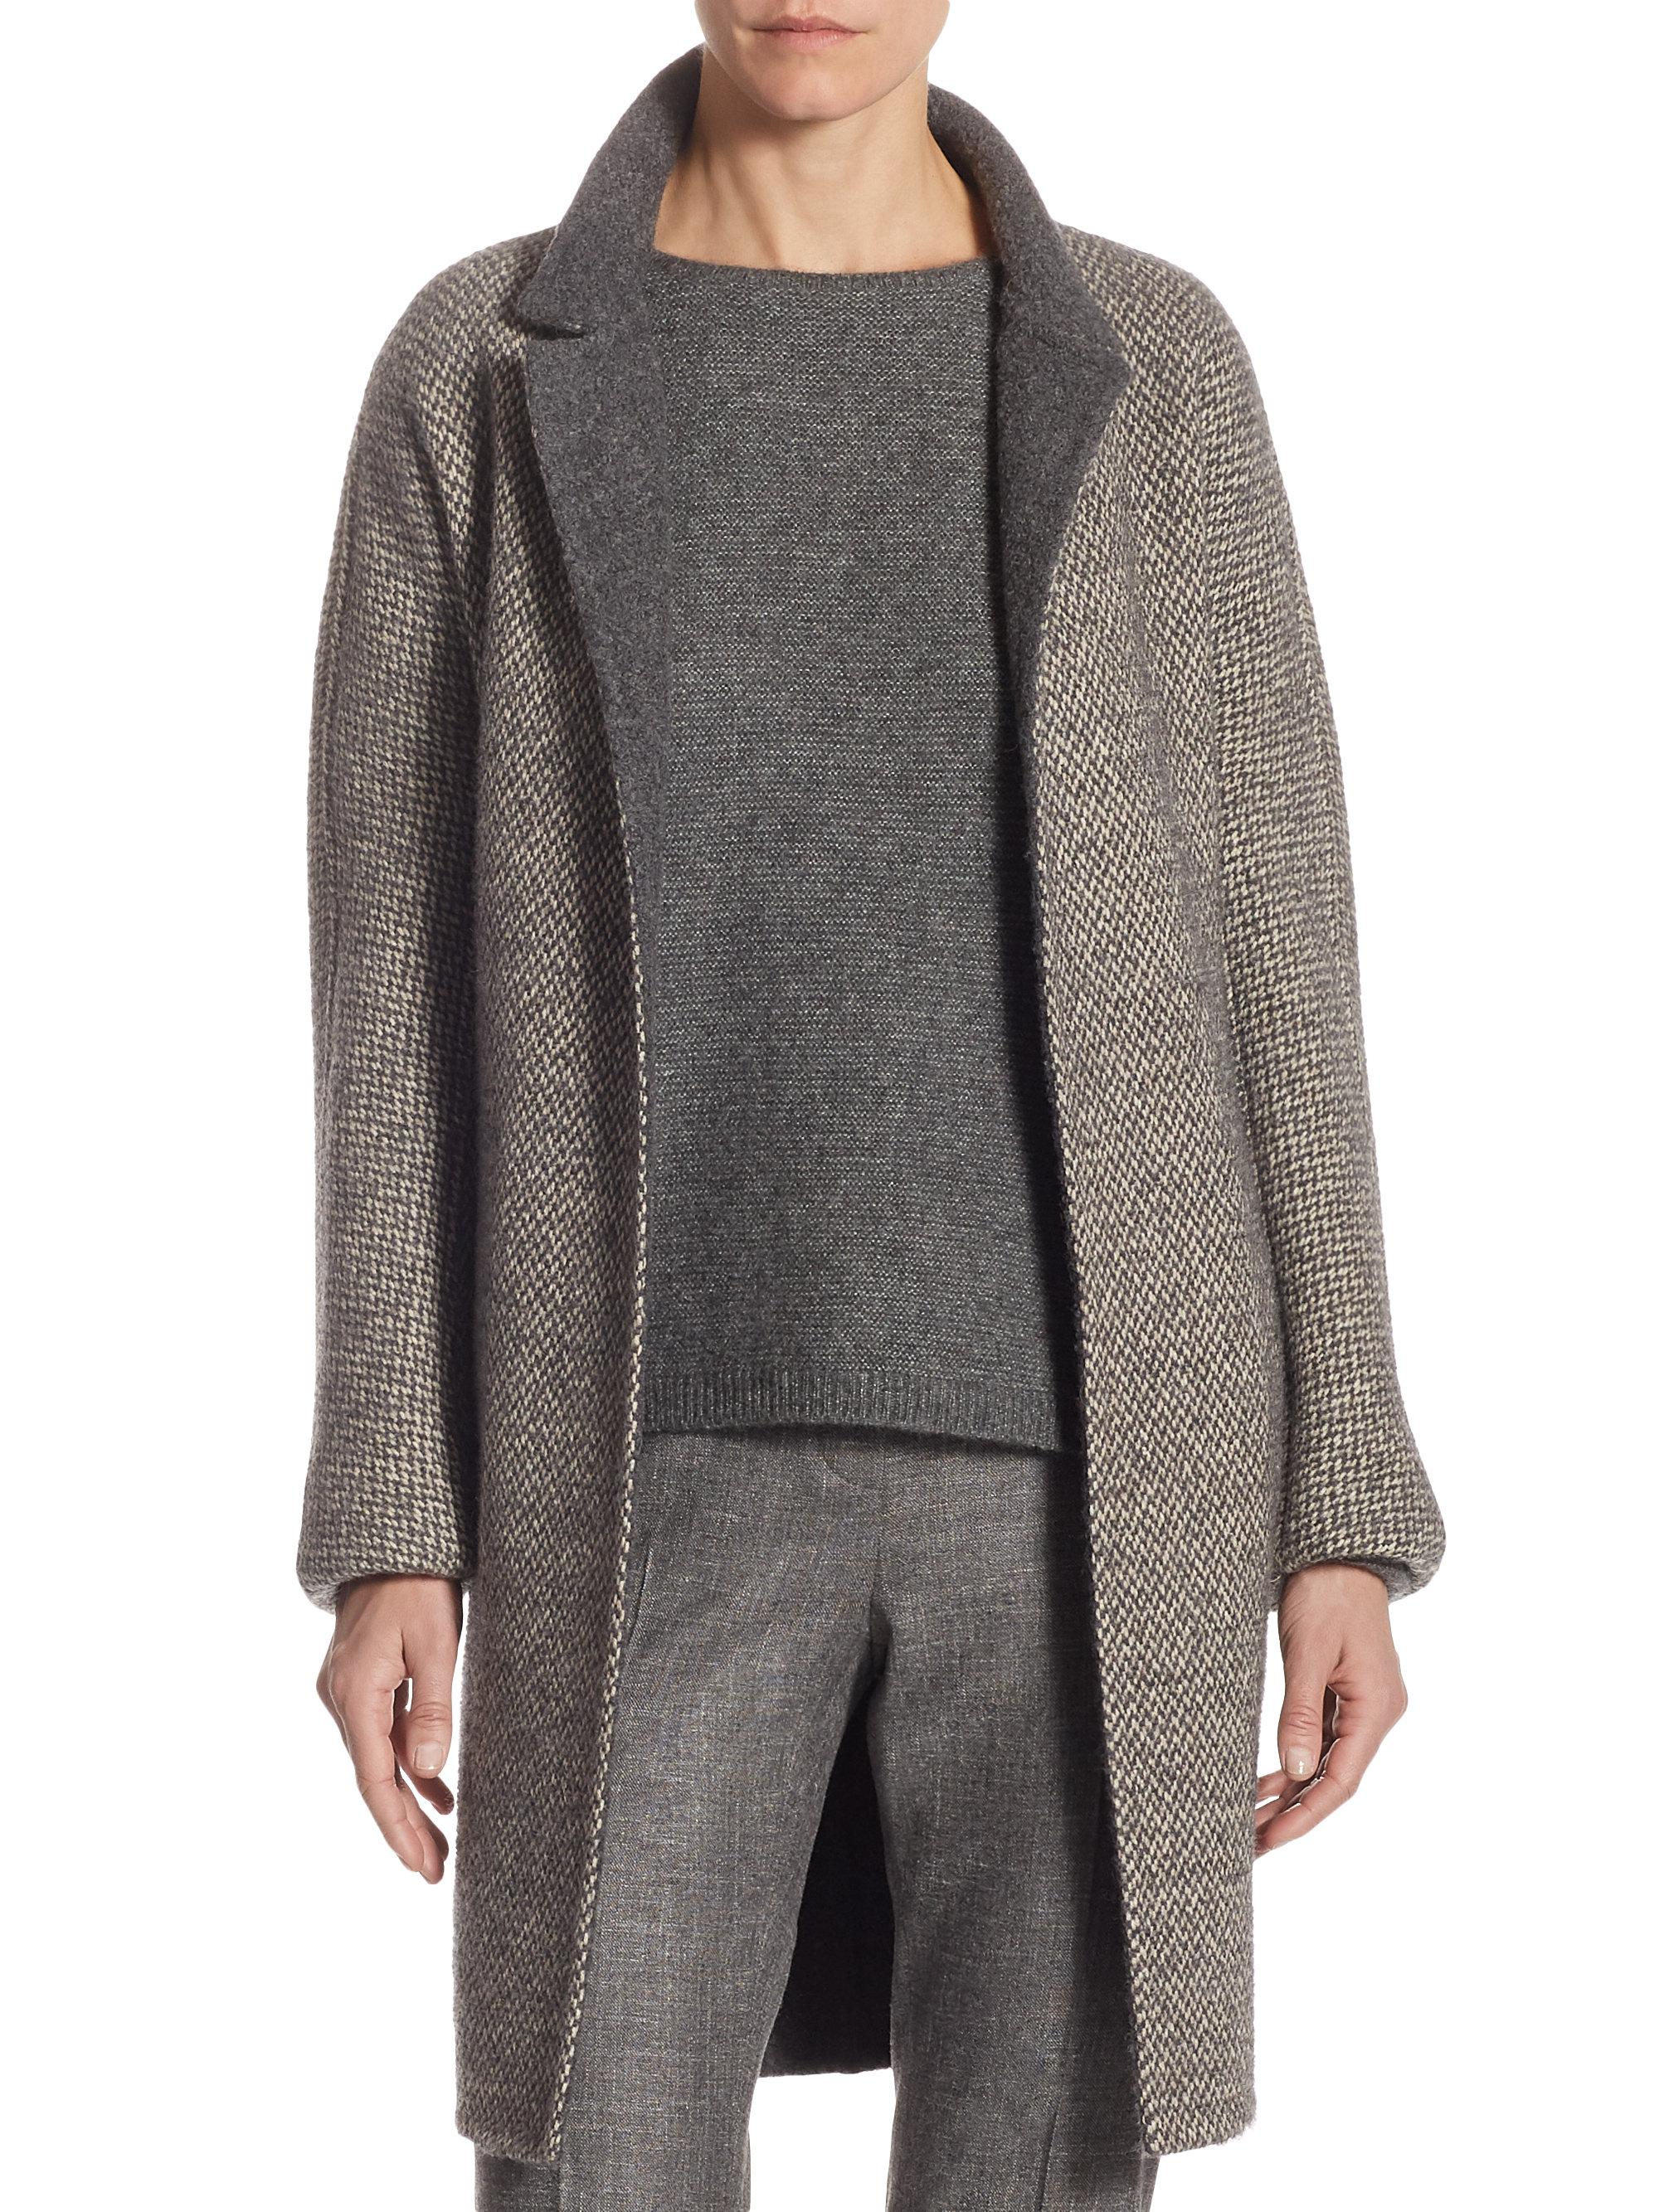 Loro Piana Ramsey Reversible Wool & Alpaca Jacket in Gray - Lyst